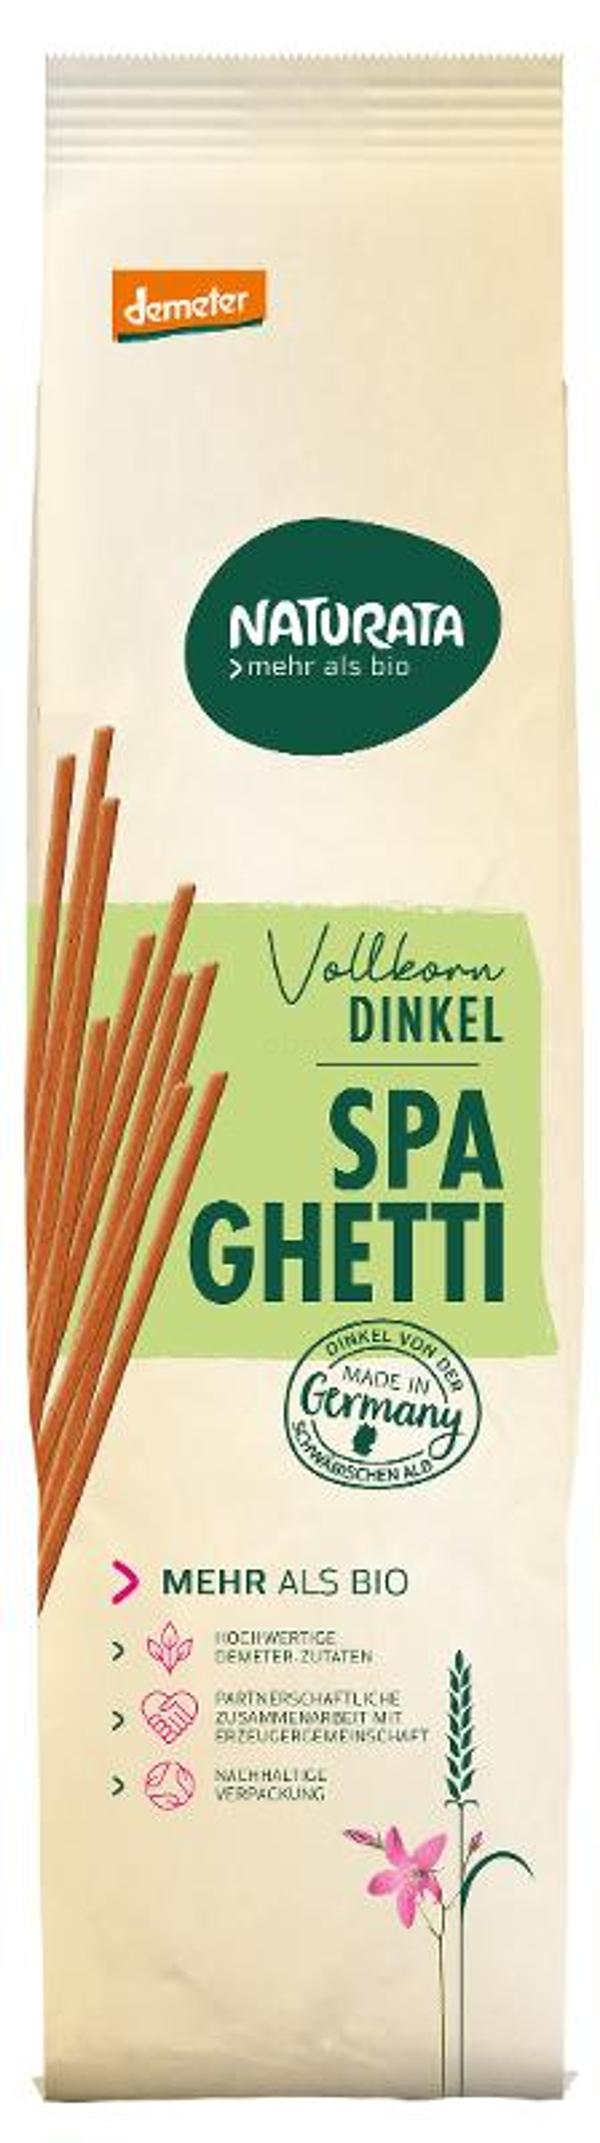 Produktfoto zu Vollkorn-Spaghetti Dinkel